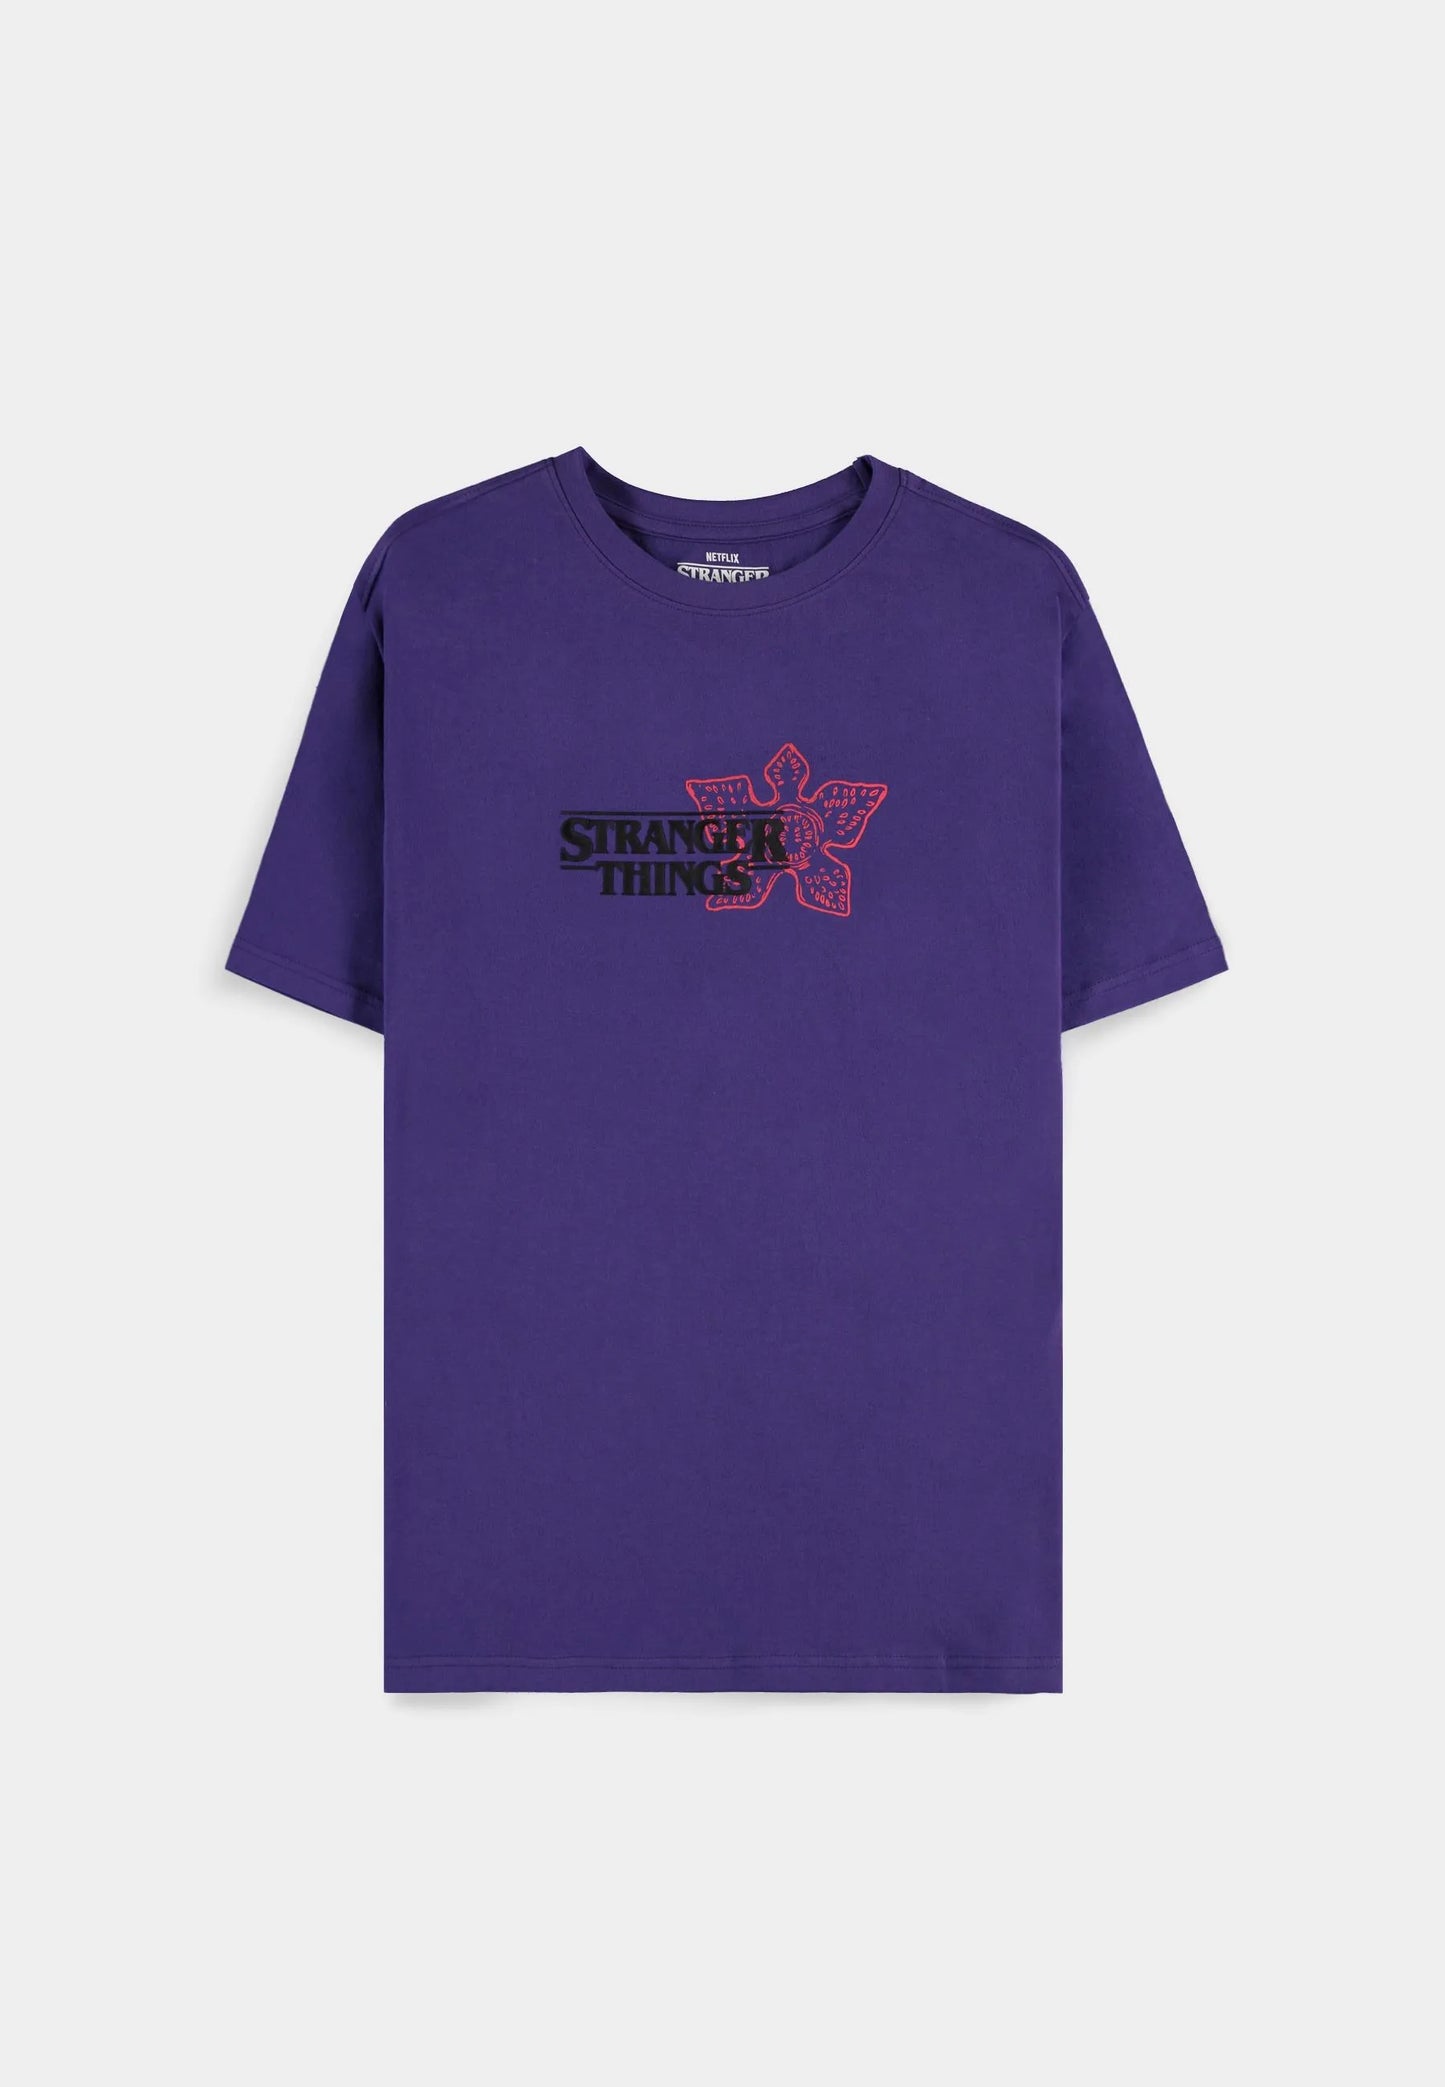 PREVENDITA Stranger Things - T-shirt a maniche corte da uomo viola Demogorgone